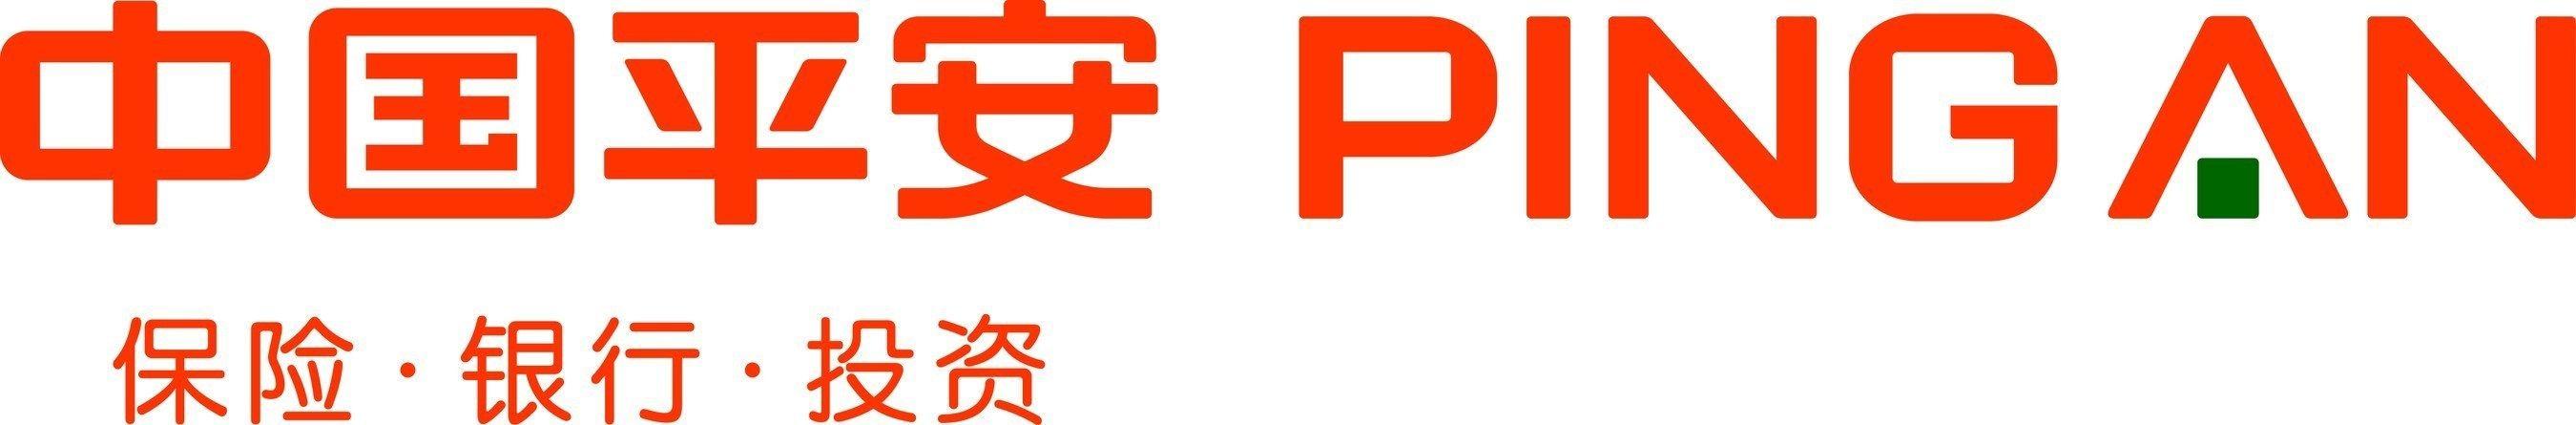 Pingan Logo - Suntech Partners with Munich Re and Ping An to Insure Its